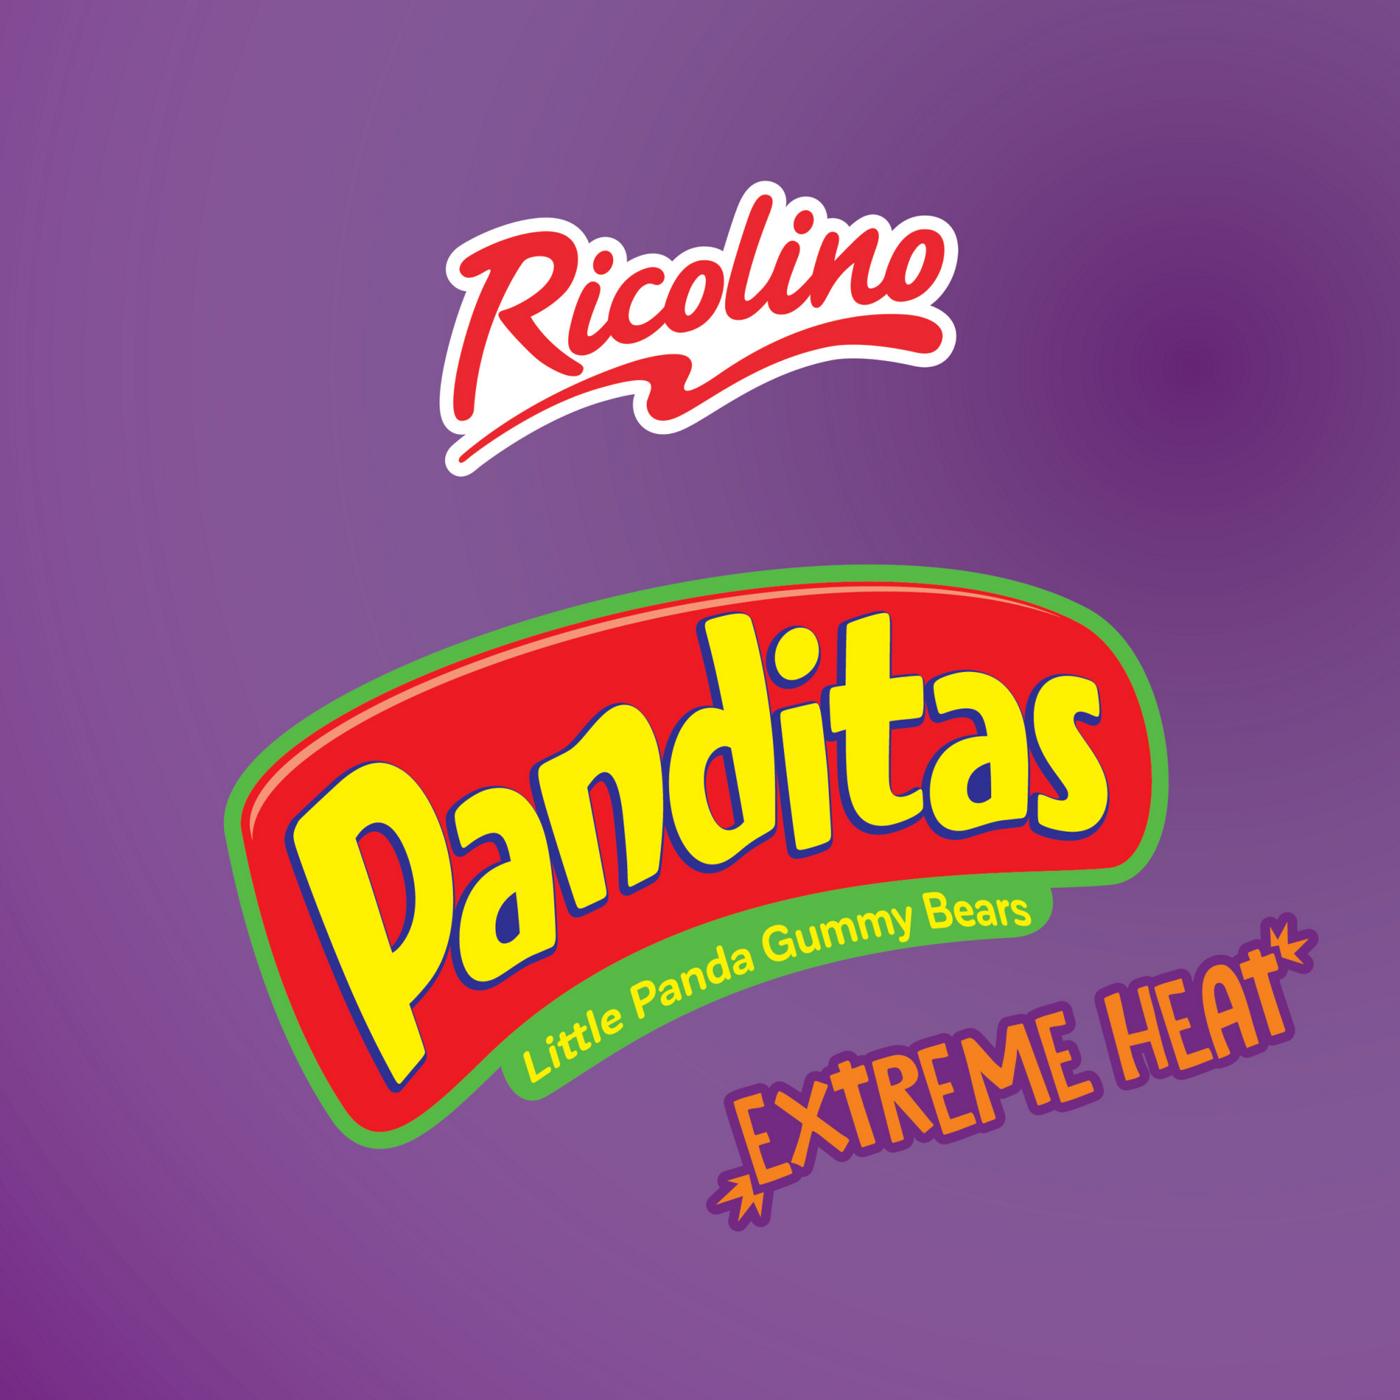 Ricolino Extreme Heat Panditas Fruit Gummy Candy; image 4 of 6